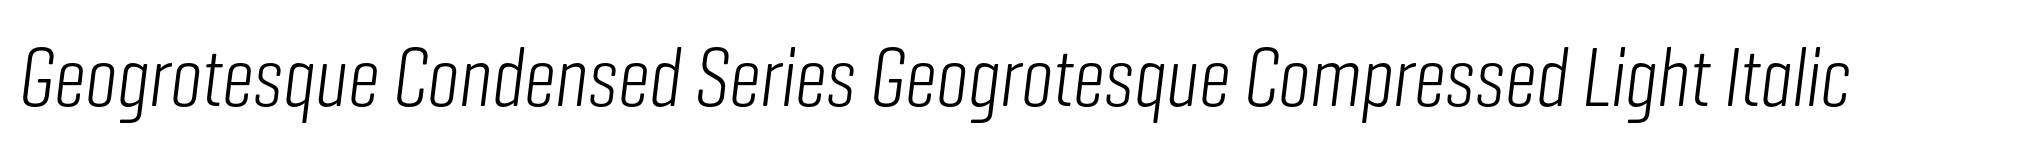 Geogrotesque Condensed Series Geogrotesque Compressed Light Italic image